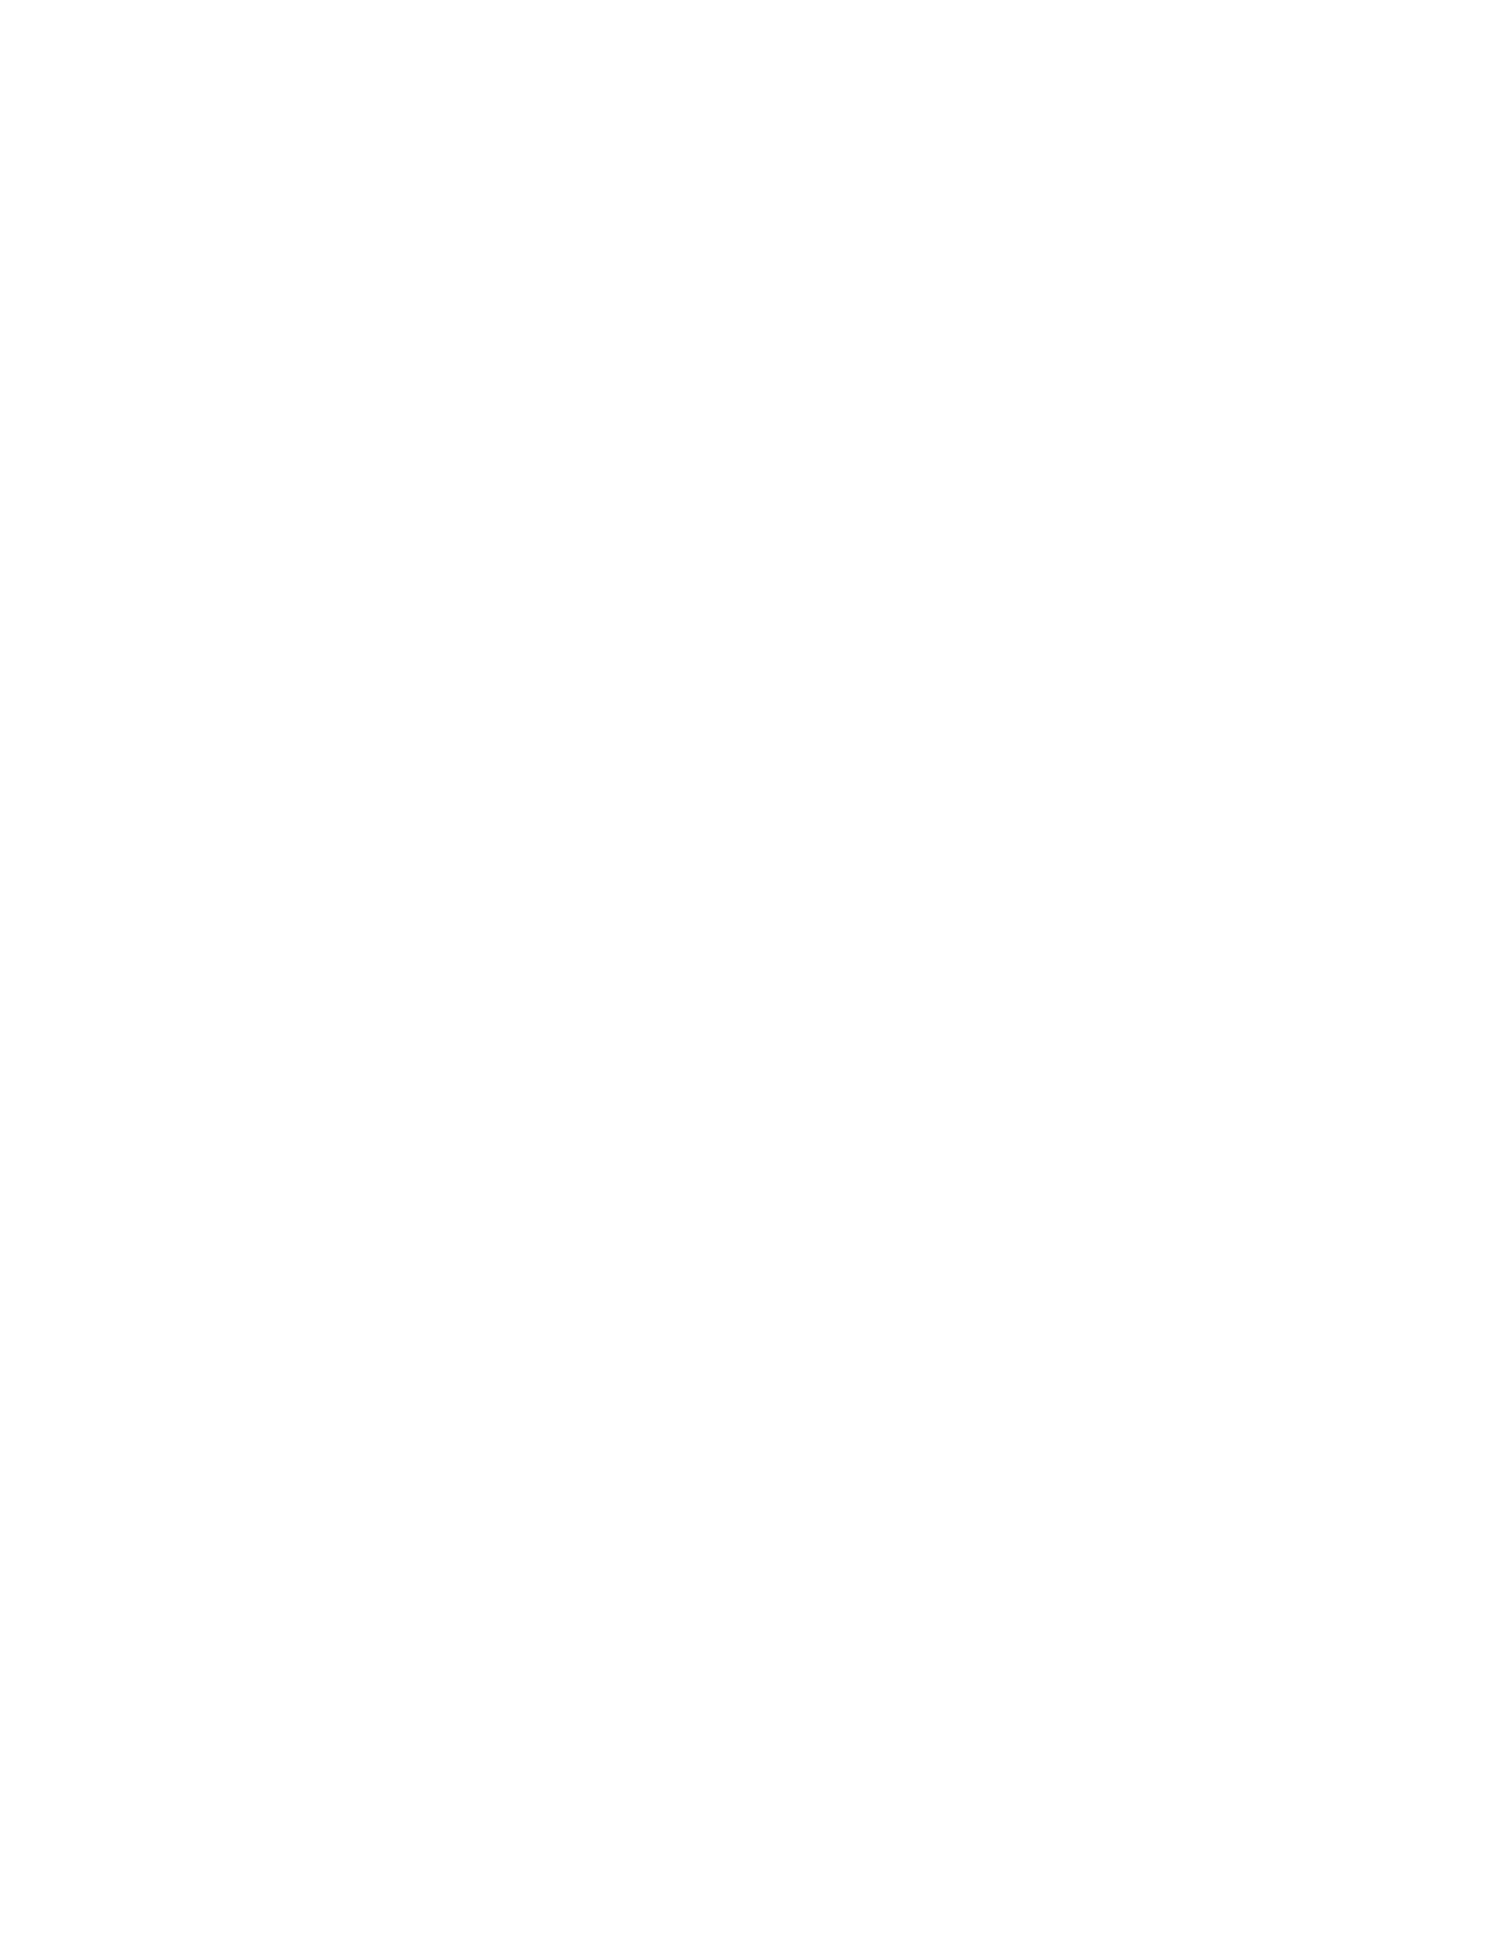 Trading Grounds Coffee Company